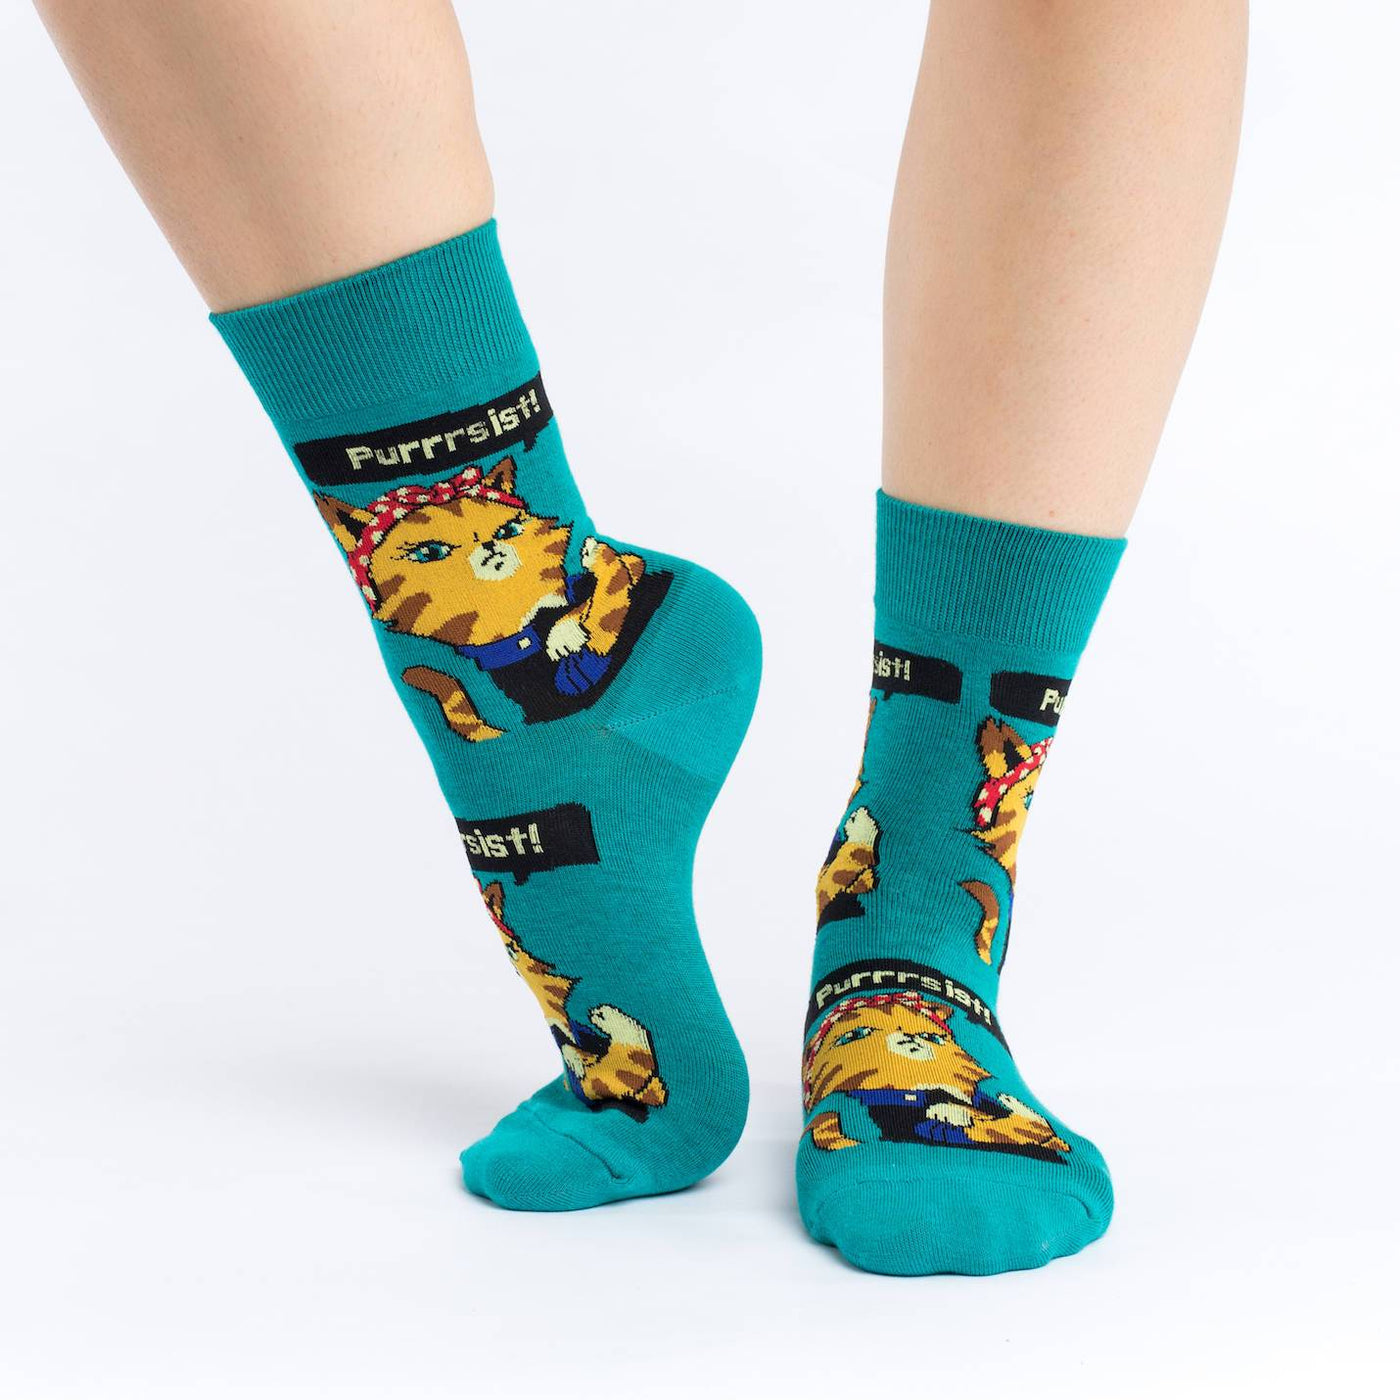 "Purrsist Cat" Cotton Crew Socks by Good Luck Sock